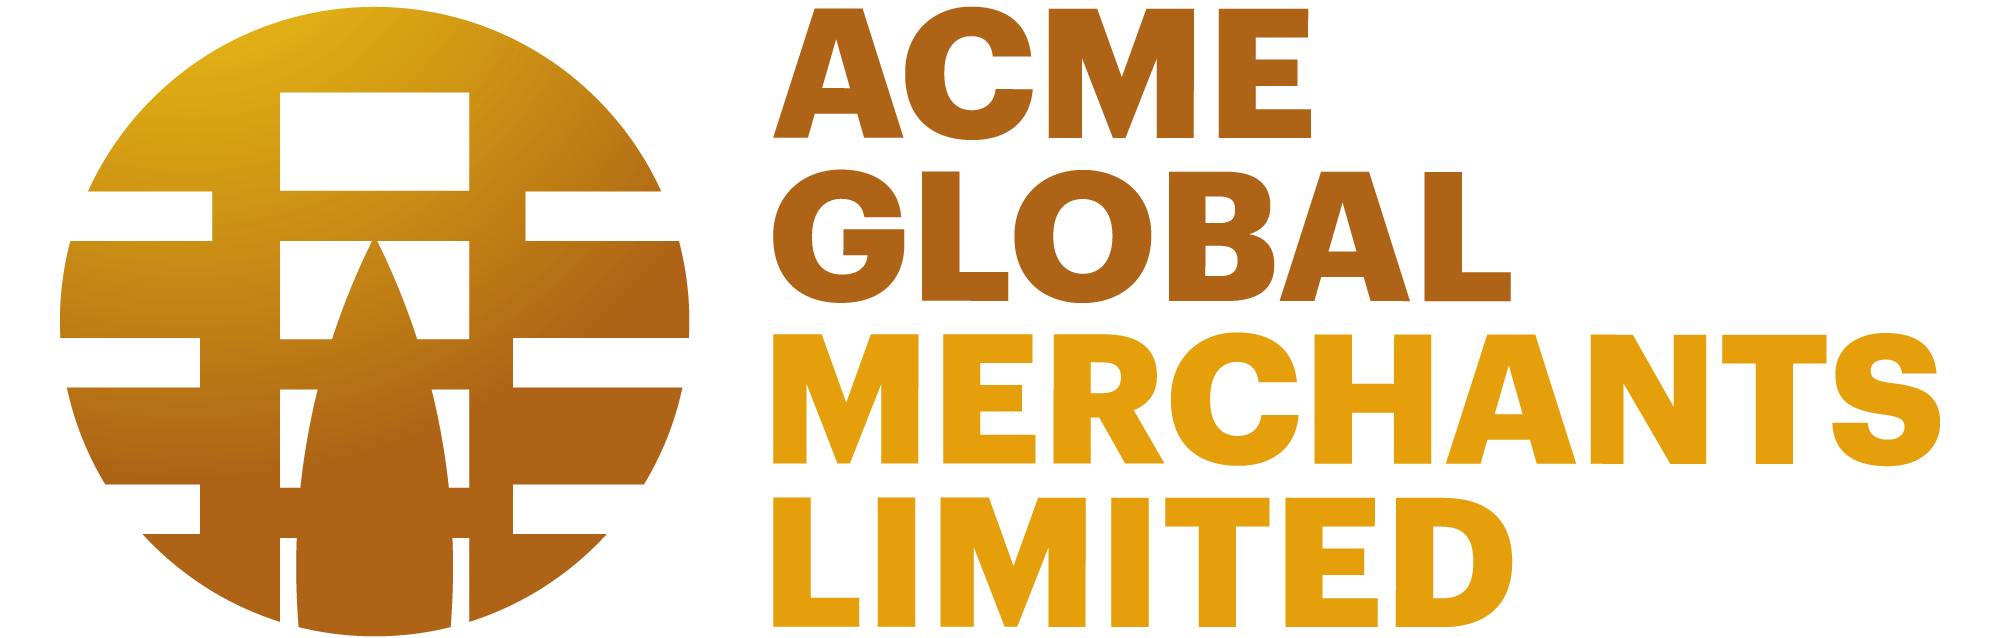 Acme Global Merchants Ltd